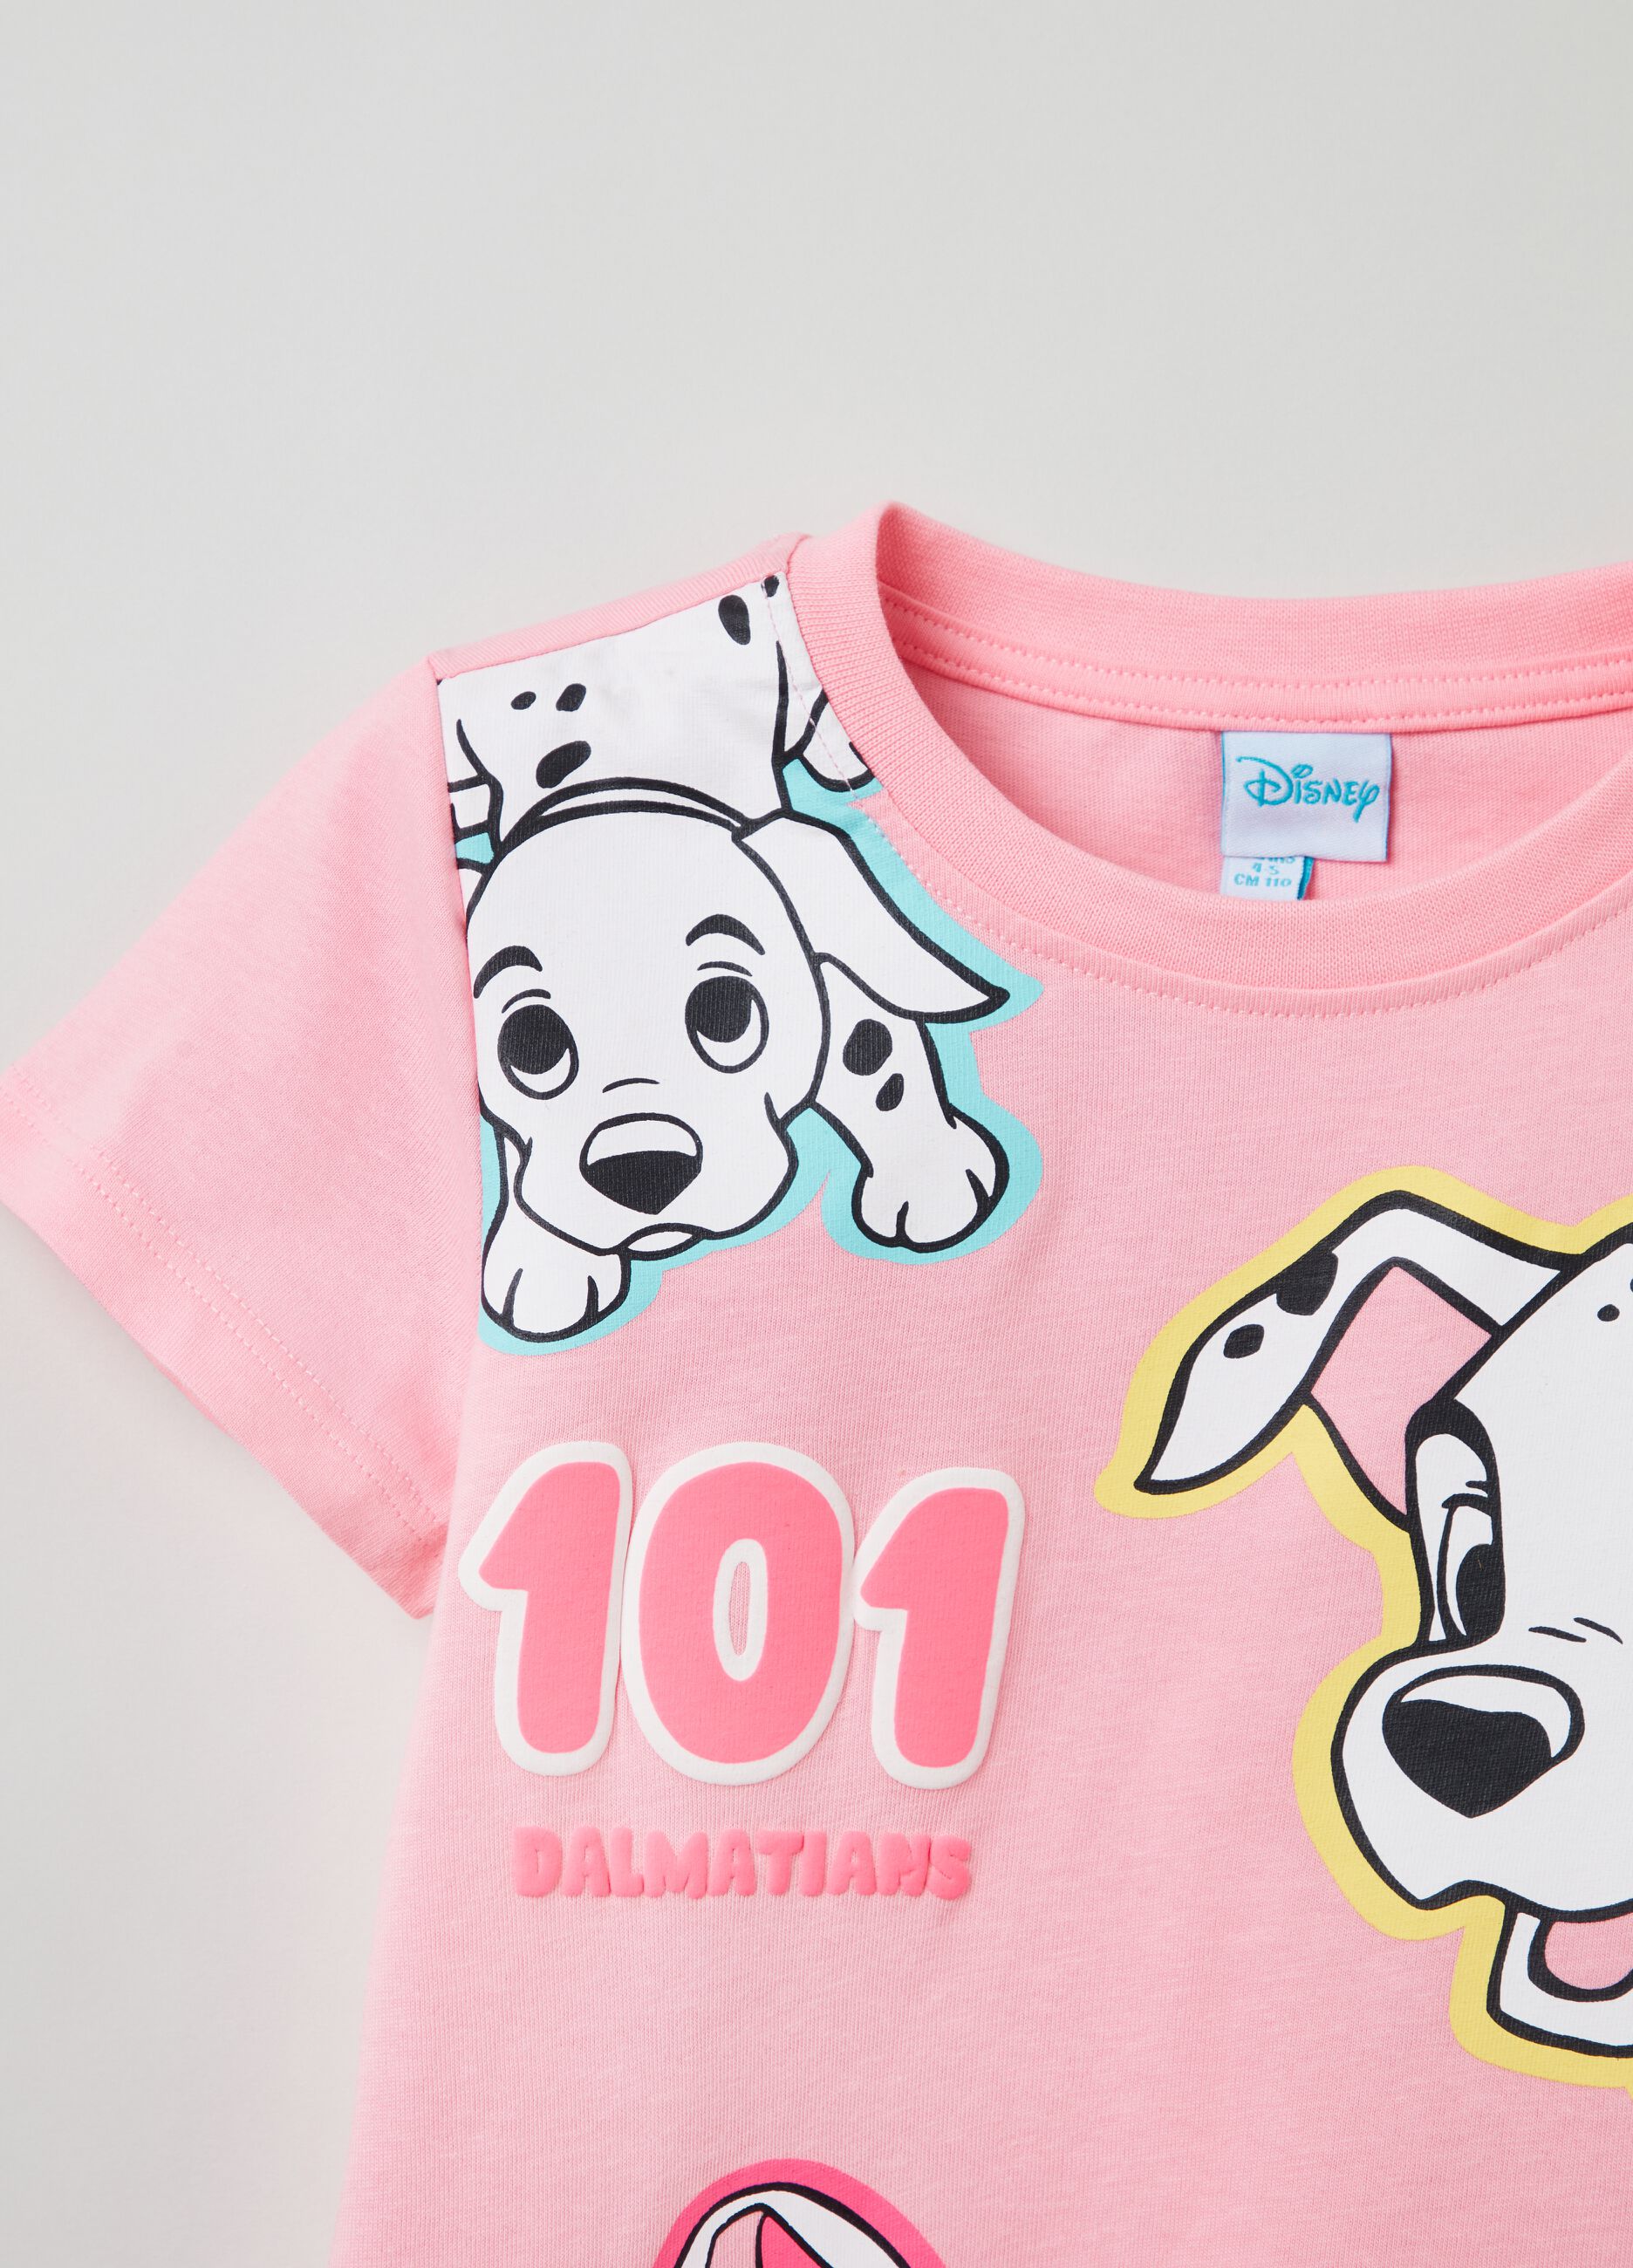 T-shirt with Disney 101 Dalmatians print